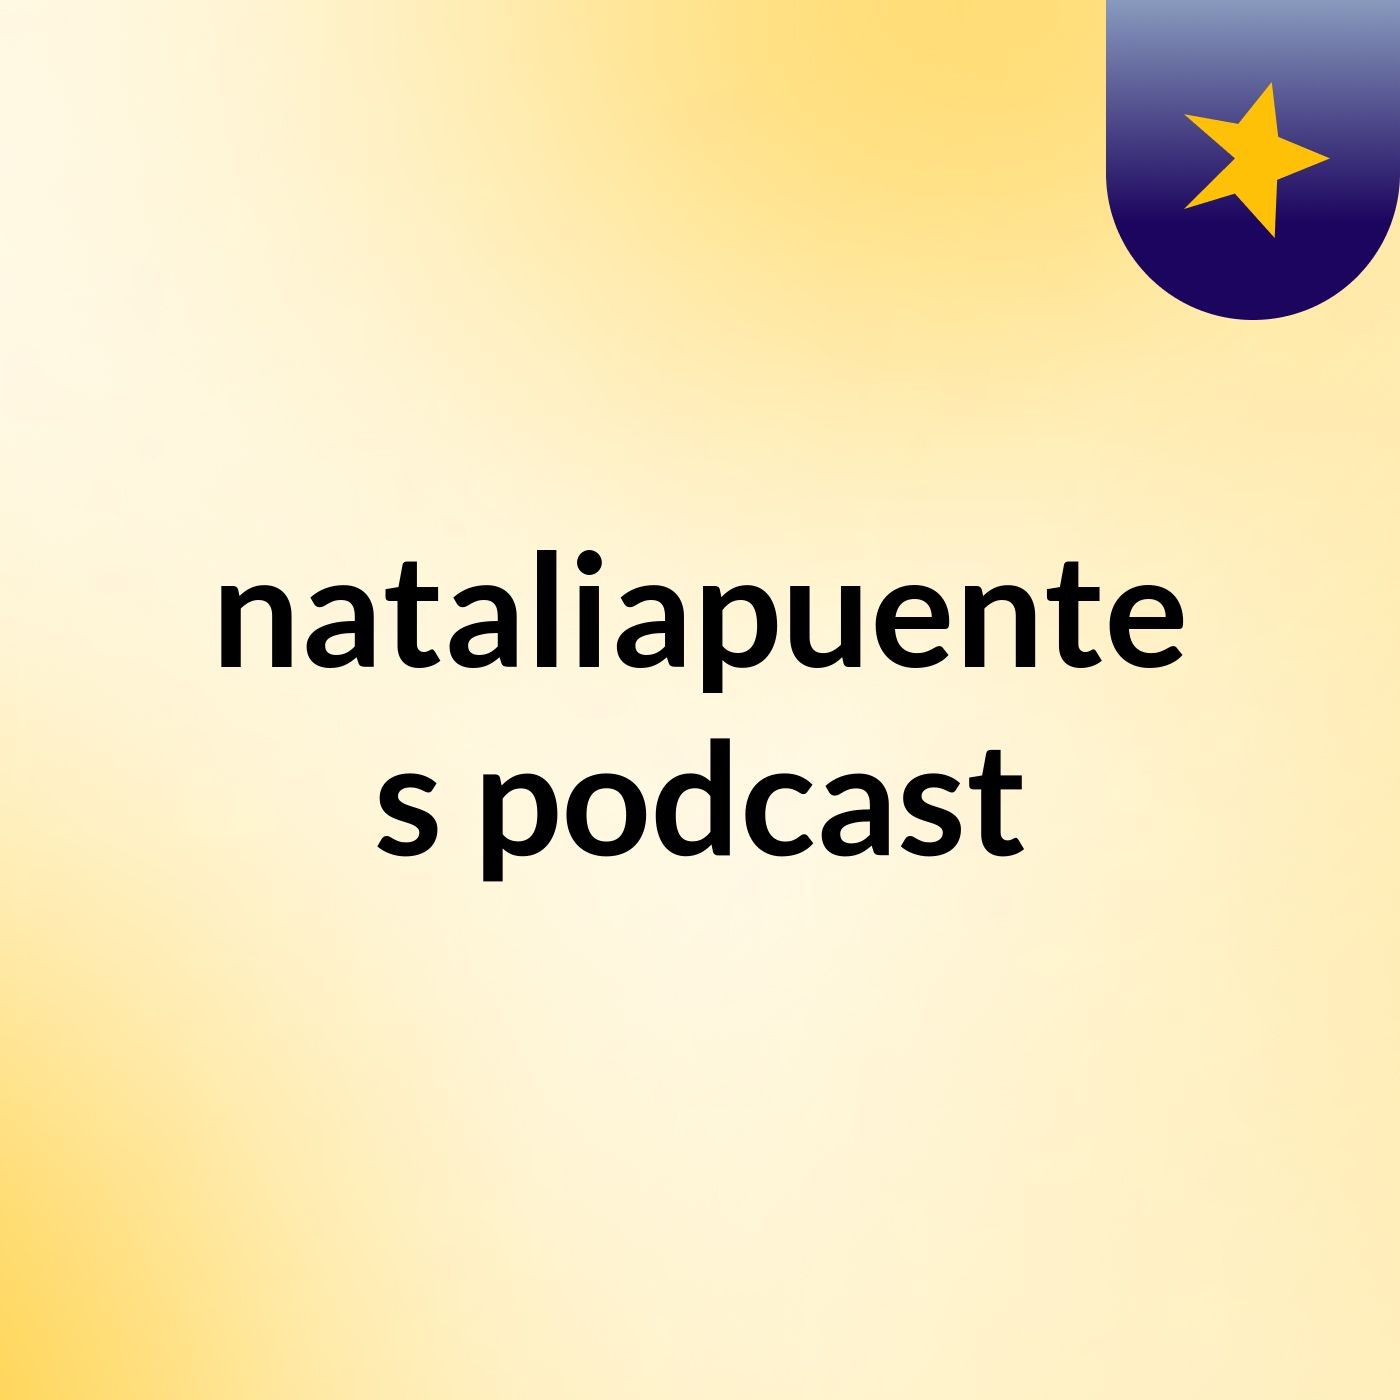 nataliapuente's podcast